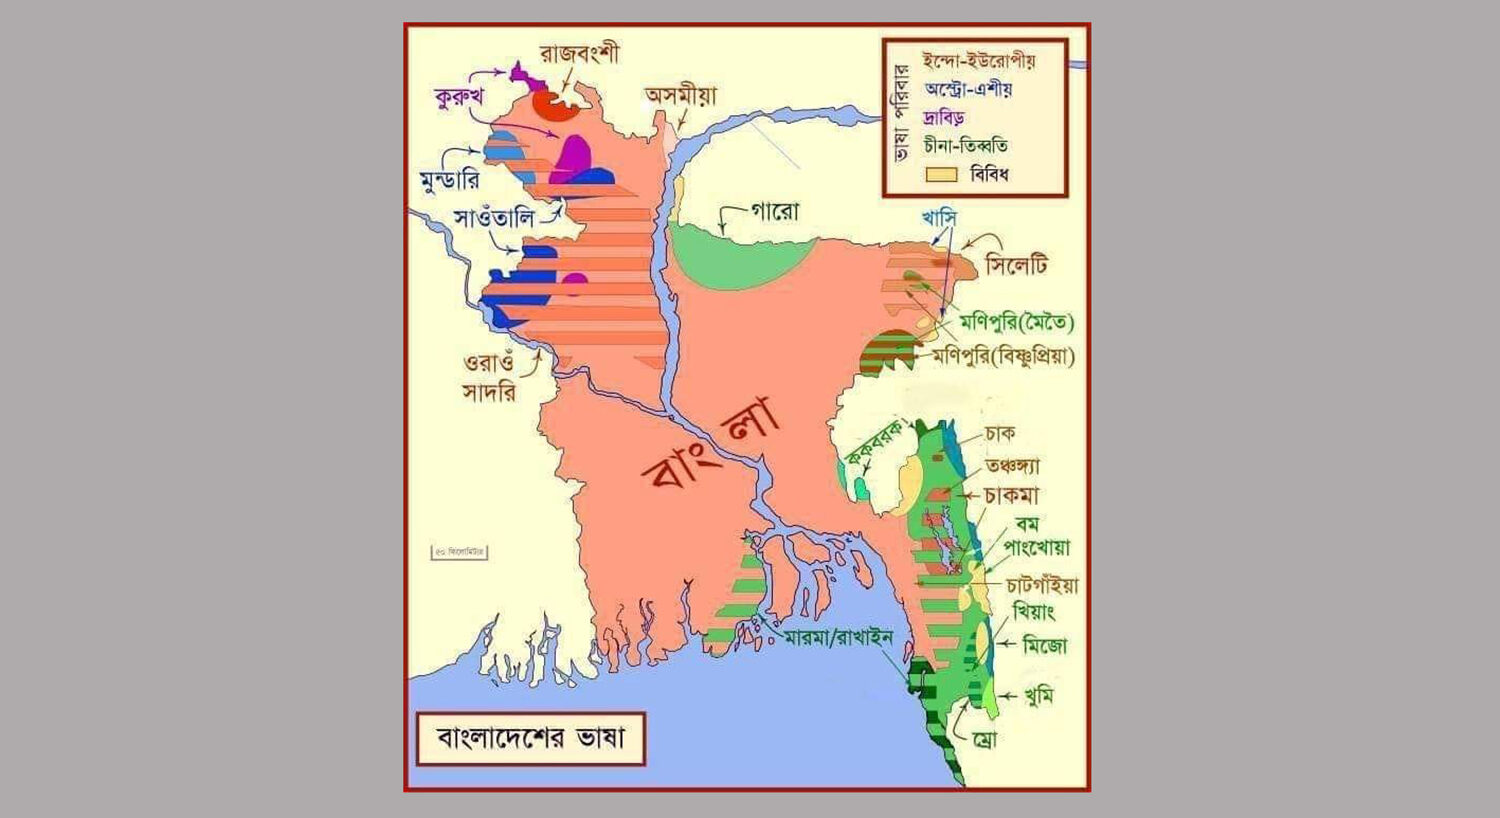 Bangla Language is Always Changing